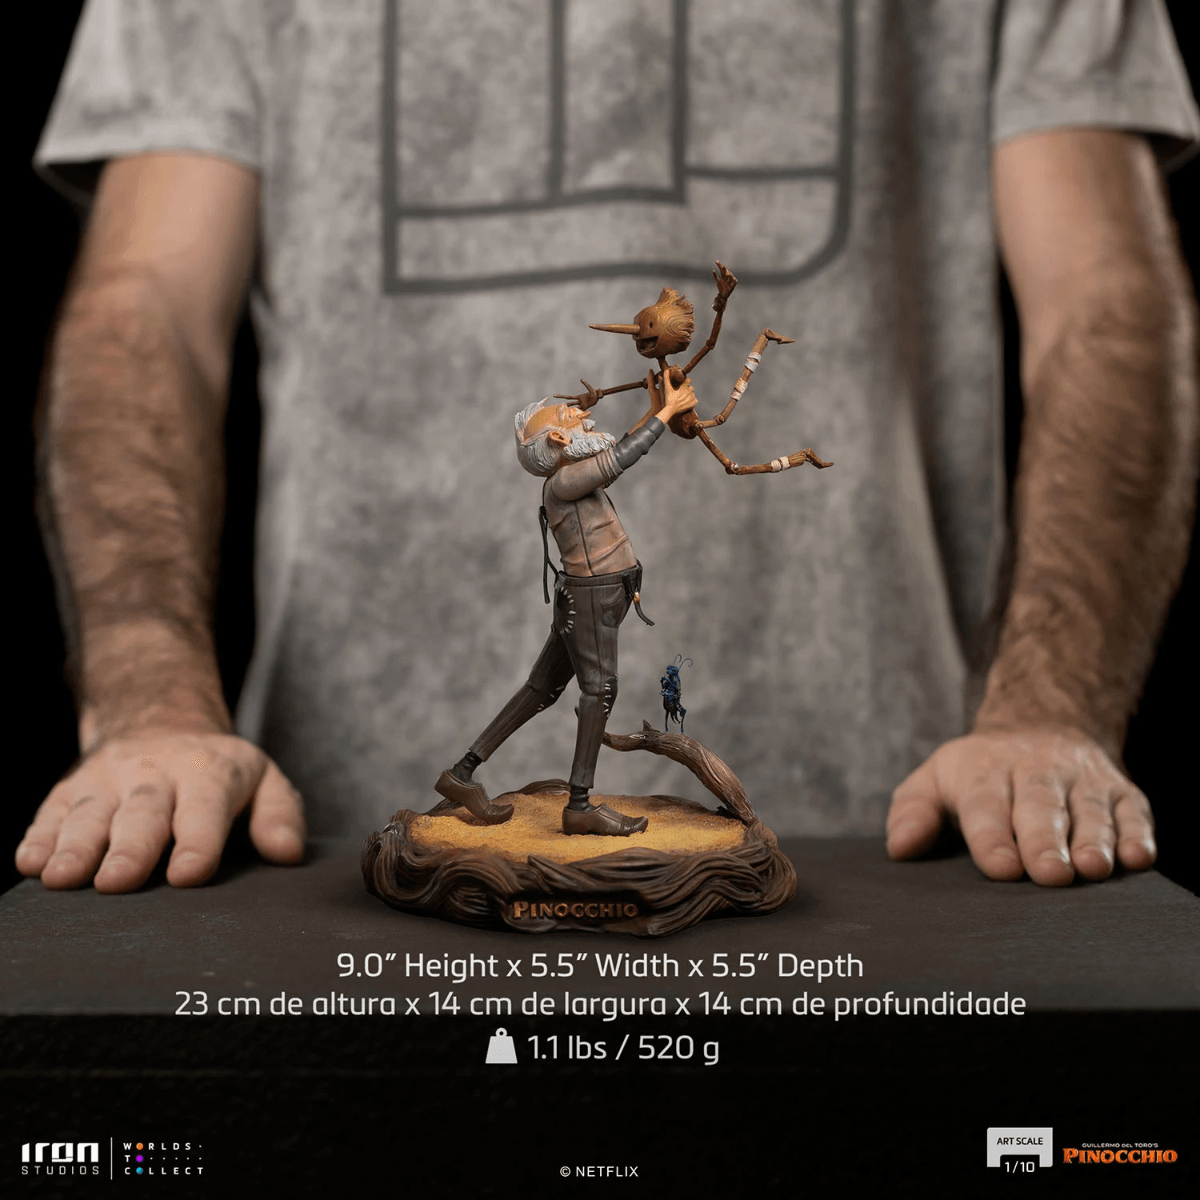 IRO53158 Pinocchio - Gepeto & Pinocchio 1:10 Statue - Iron Studios - Titan Pop Culture